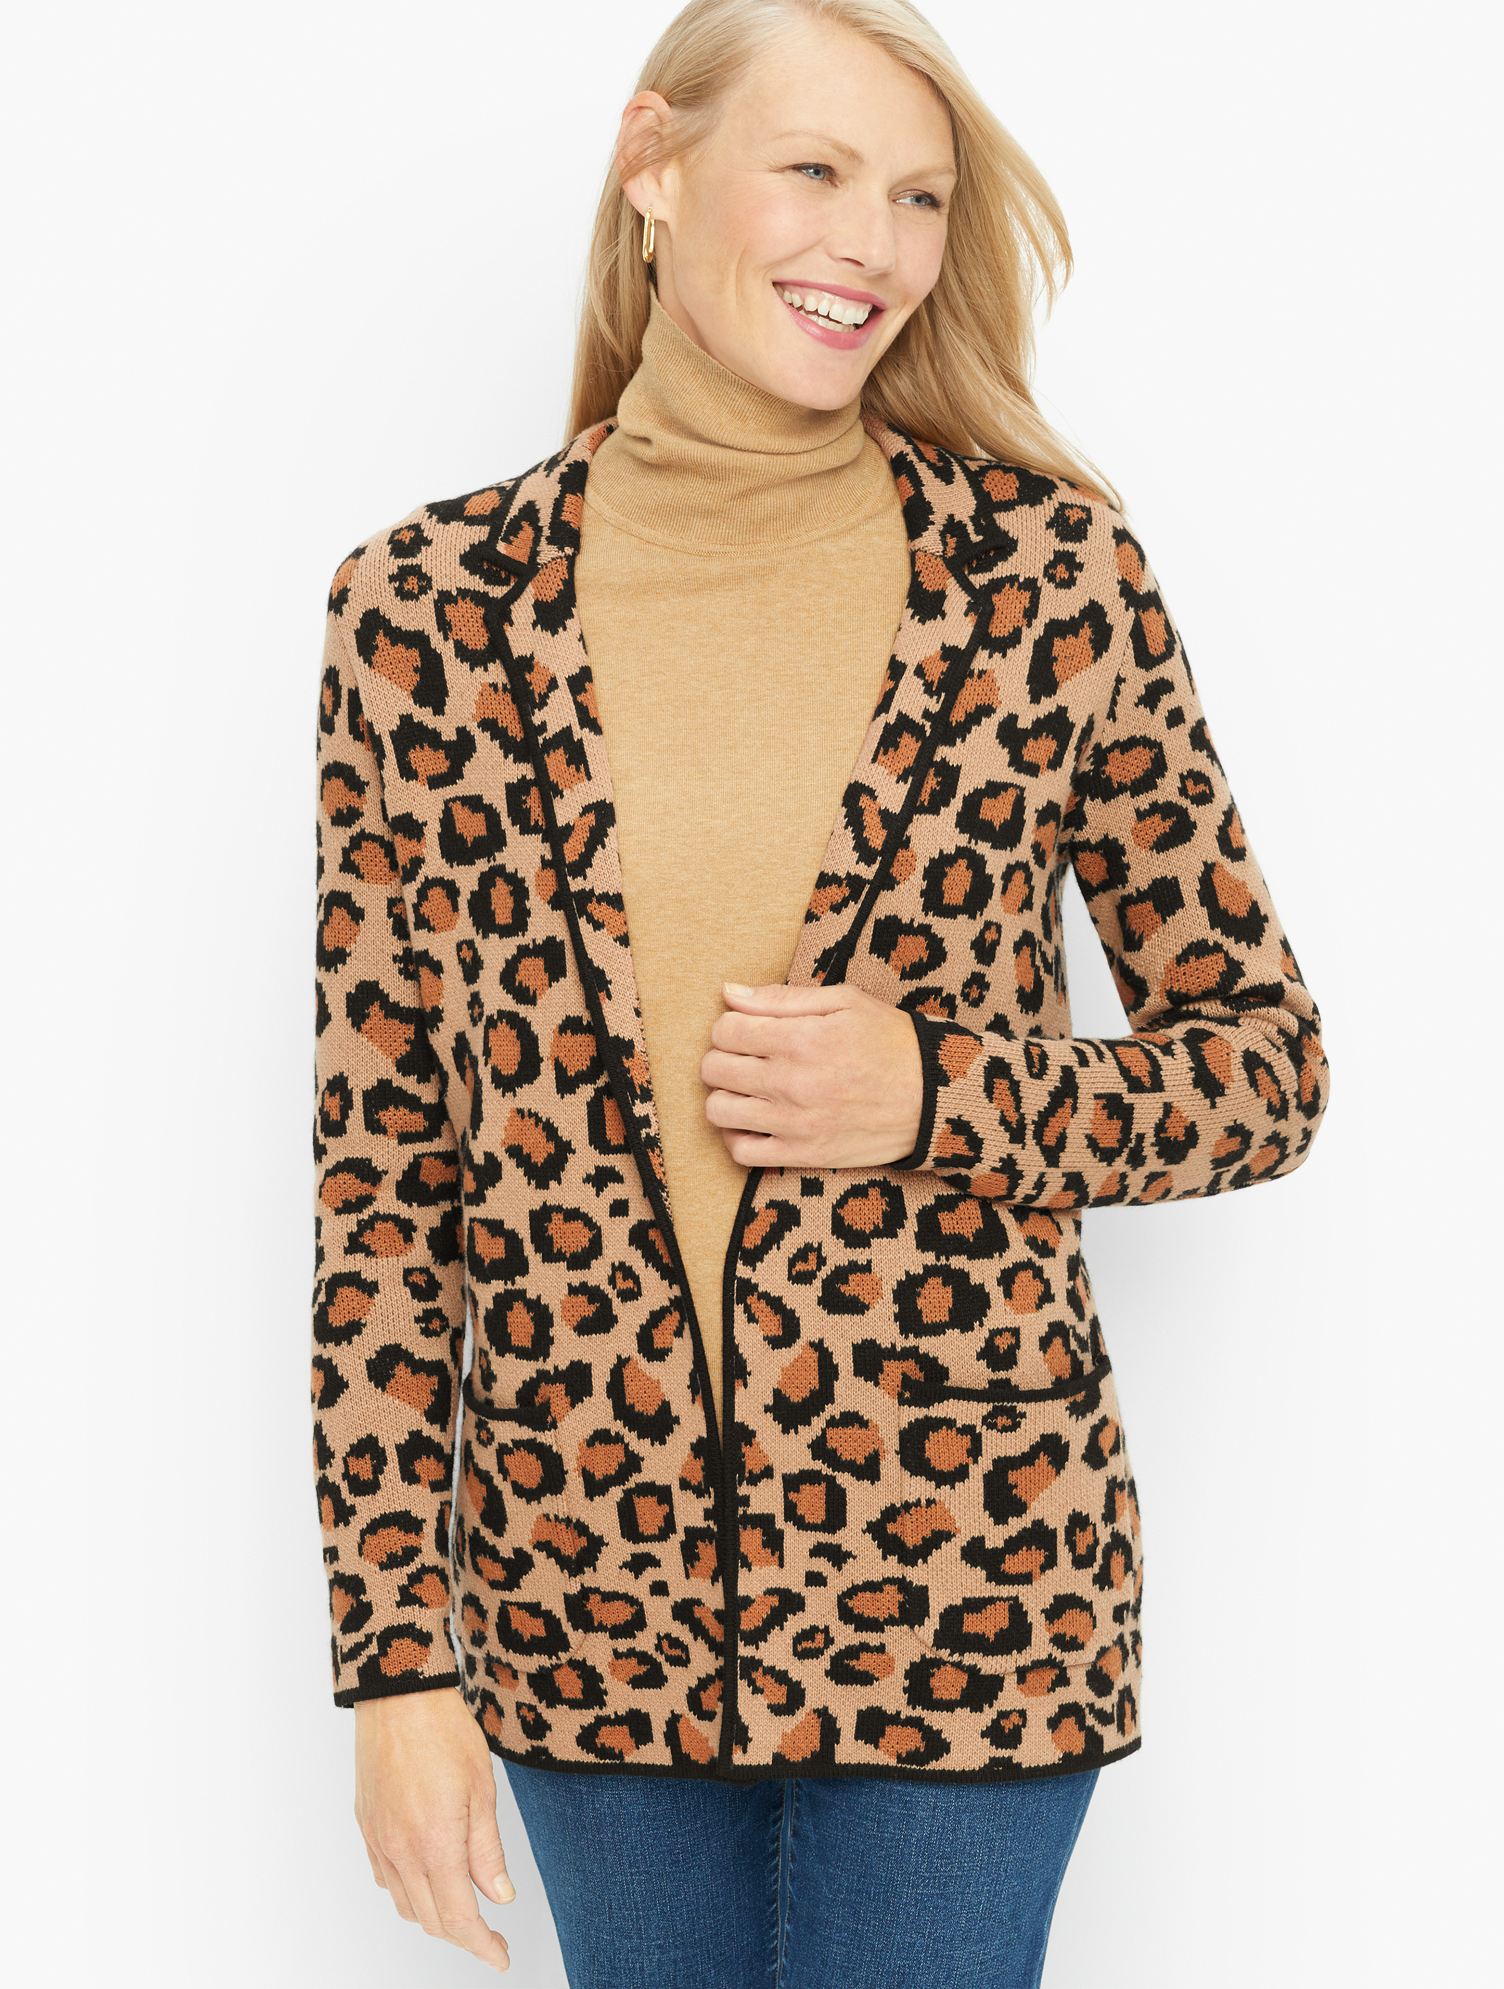 Talbots Petite - Leopard Sweater Blazer - Toasted Coconut - Large